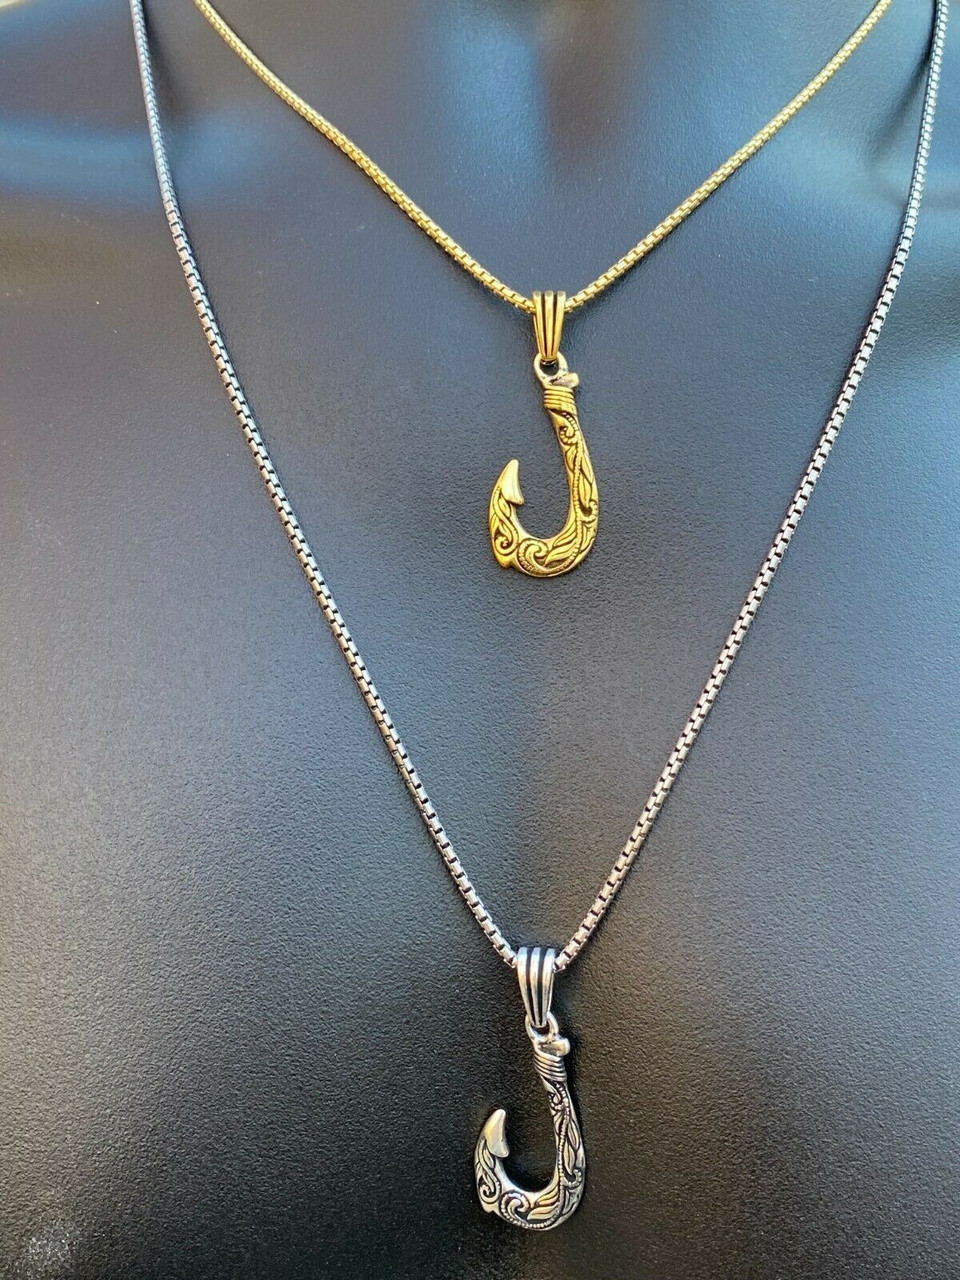 Buy Hawaiian Silver Jewelry Large Fish Hook Silver Pendant